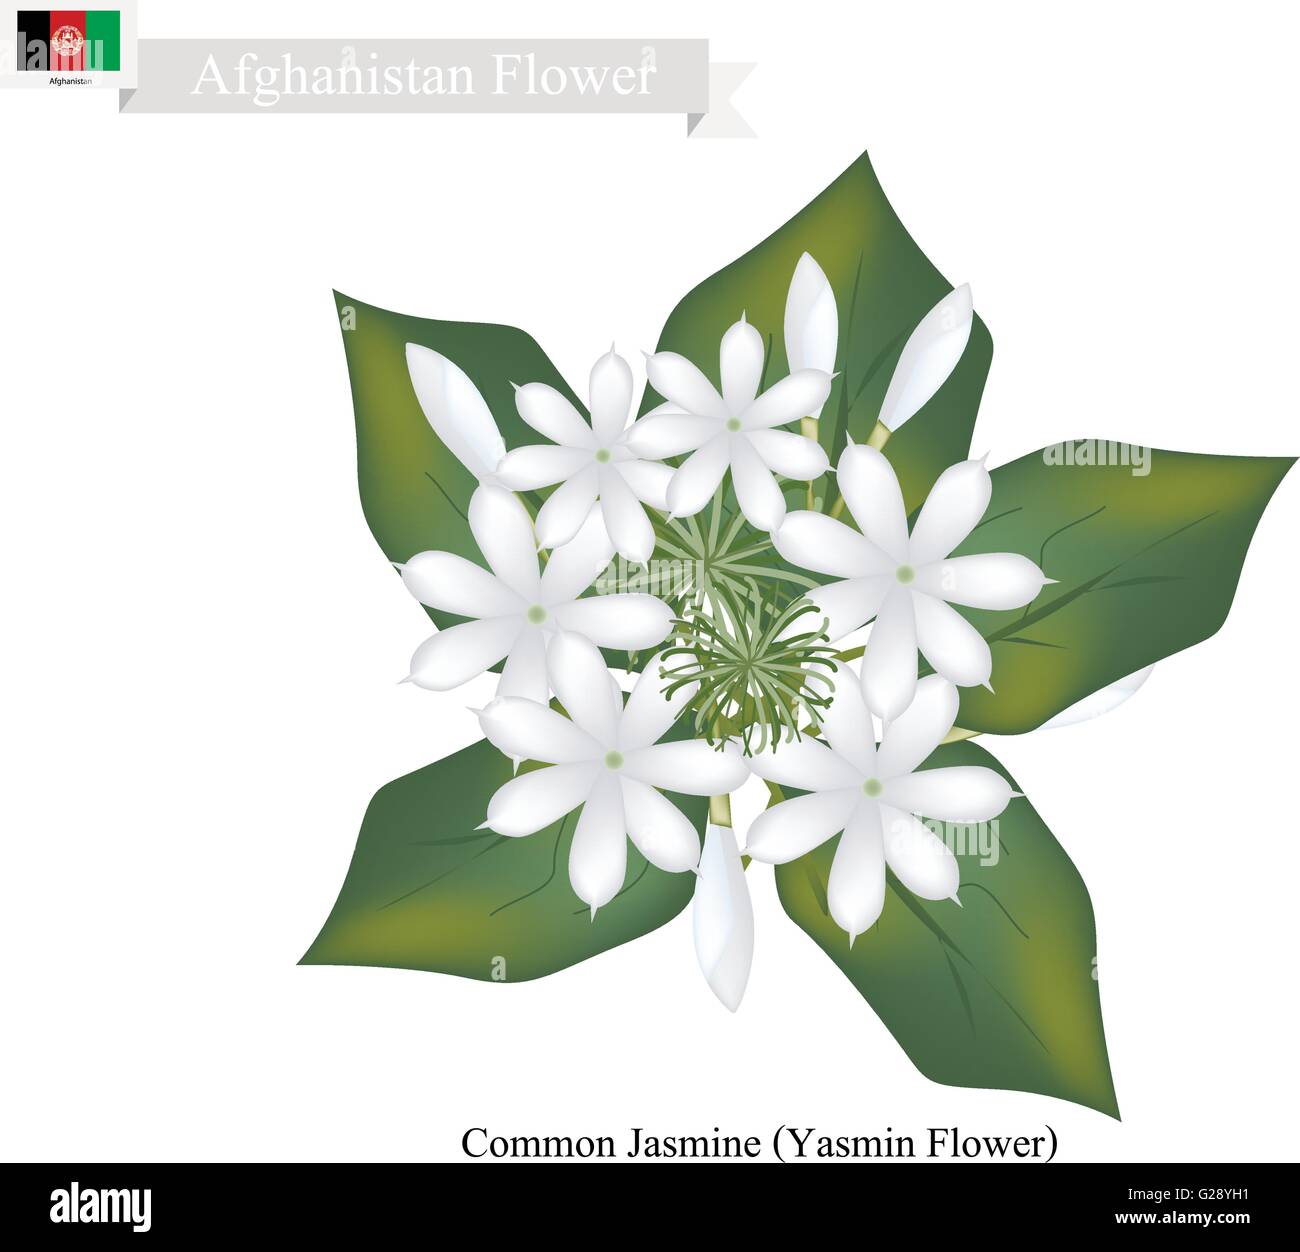 Afghanistan Flower, Illustration of Common Jasmine Flowers. The National Flower of Afghanistan. Stock Vector